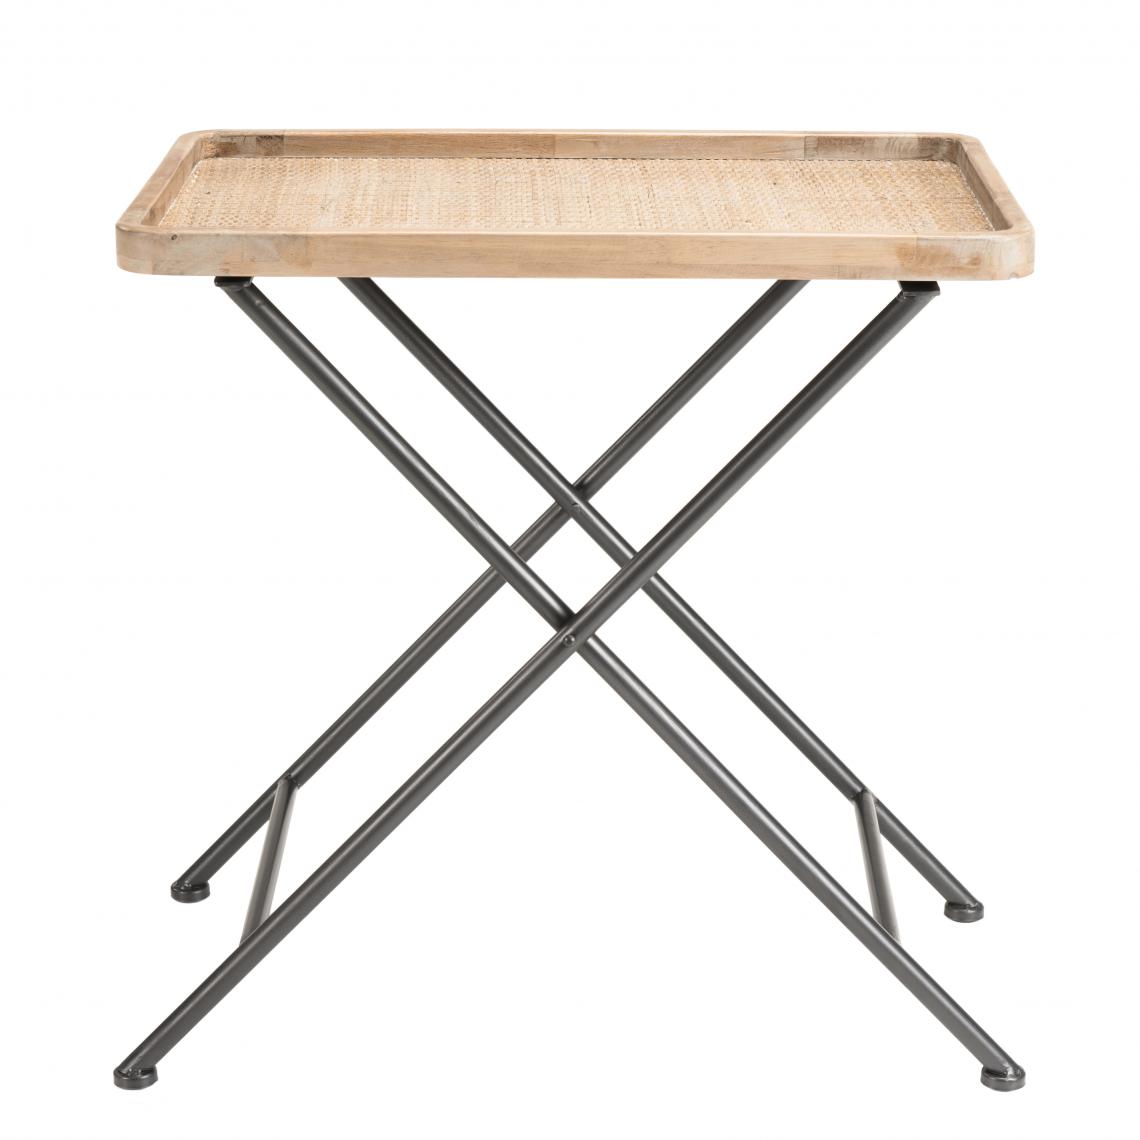 MACABANE - Table d'appoint rectangulaire cannage pieds métal - DORINA - Tables basses